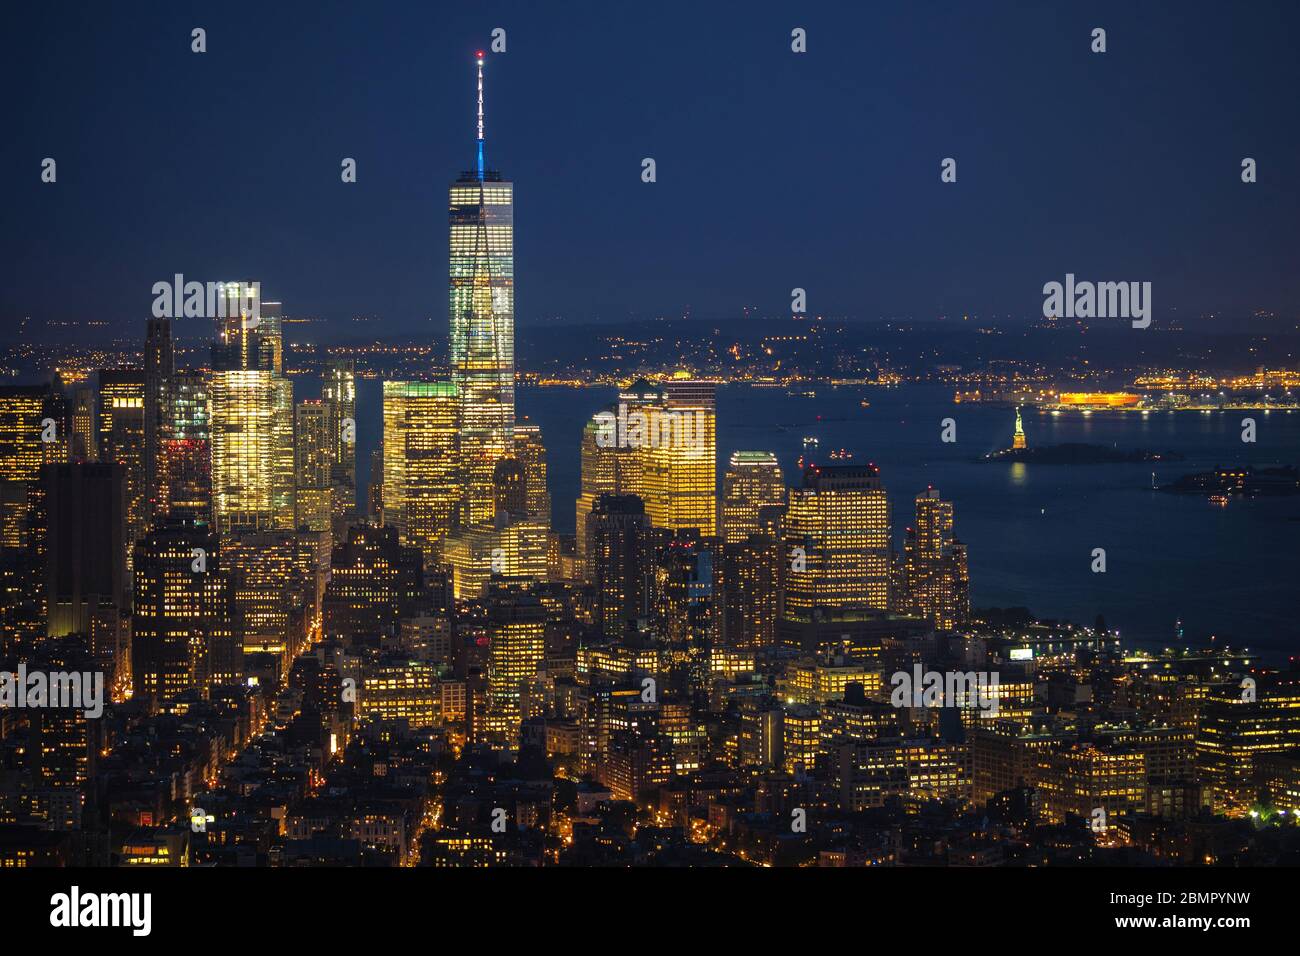 New York City skyline showing Lower Manhattan at night, United States of America. Stock Photo